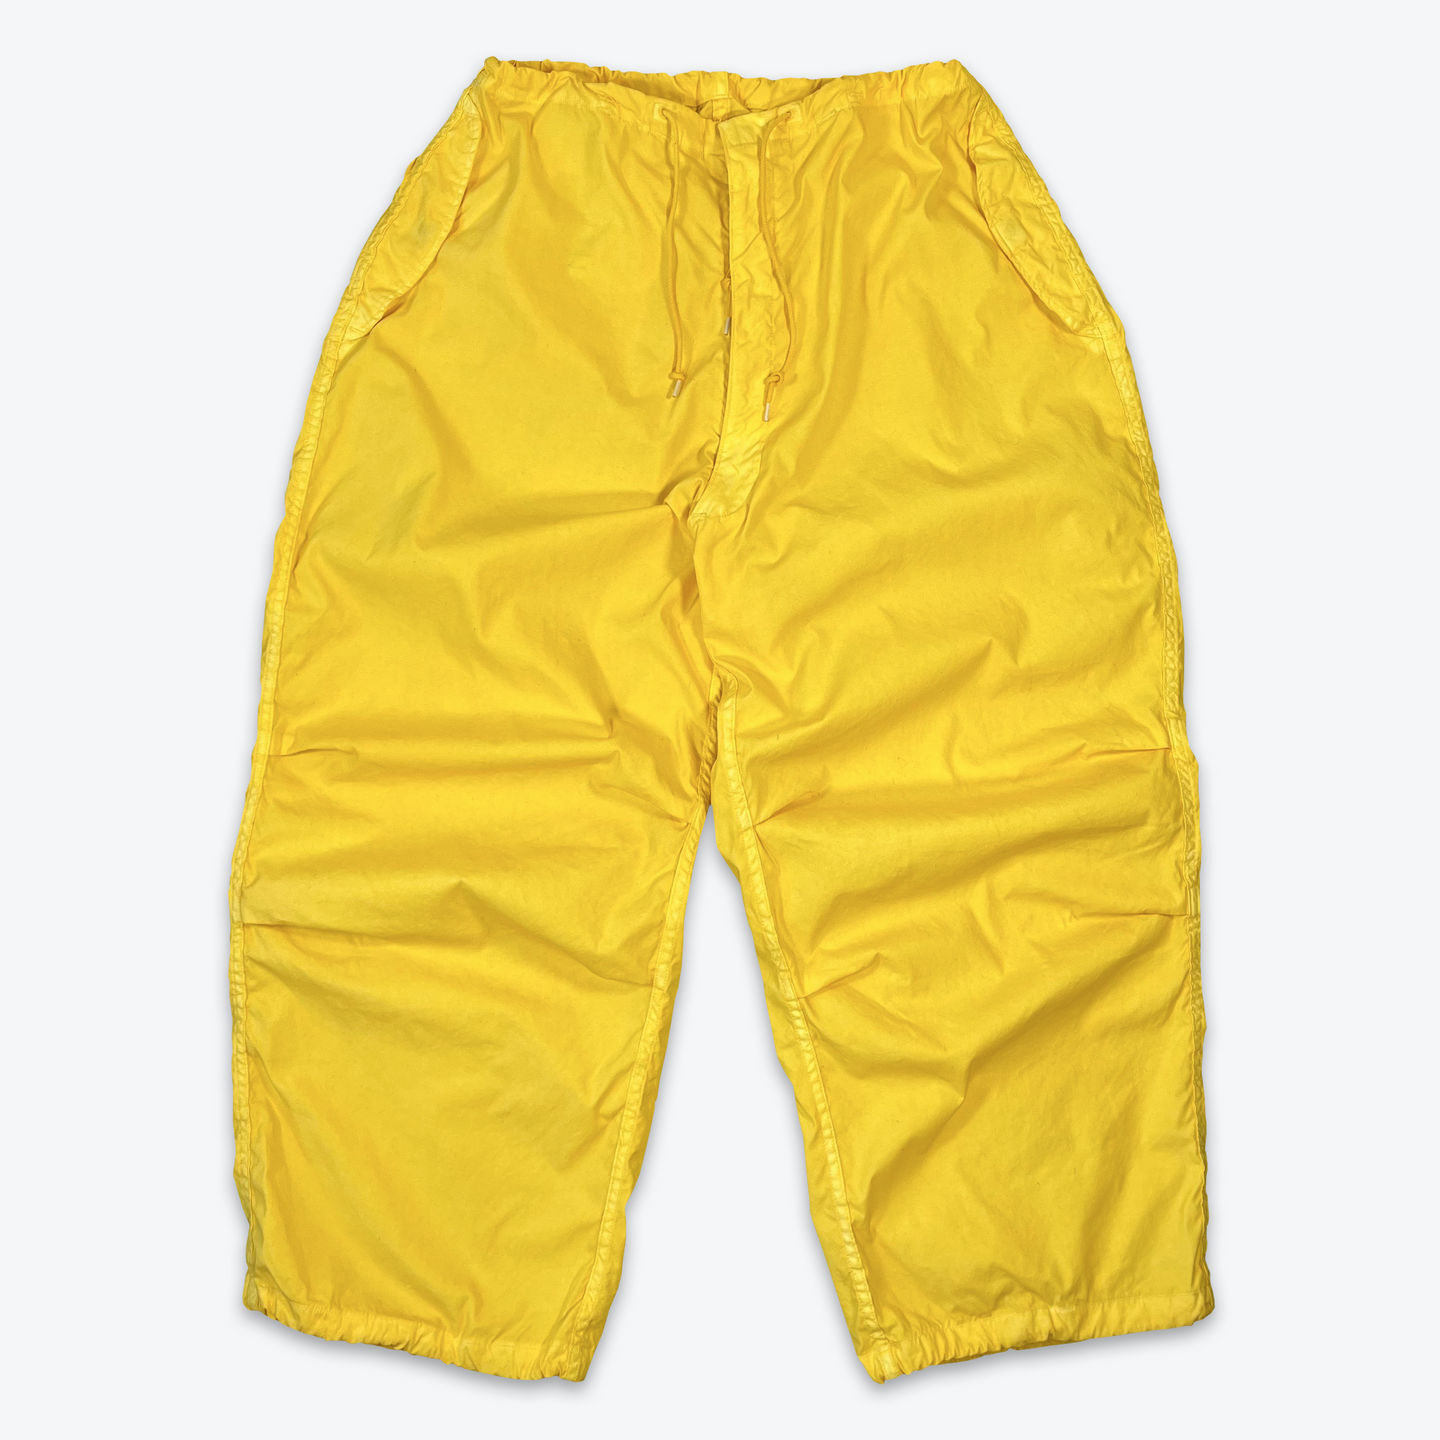 Vintage Military Pants (Yellow)